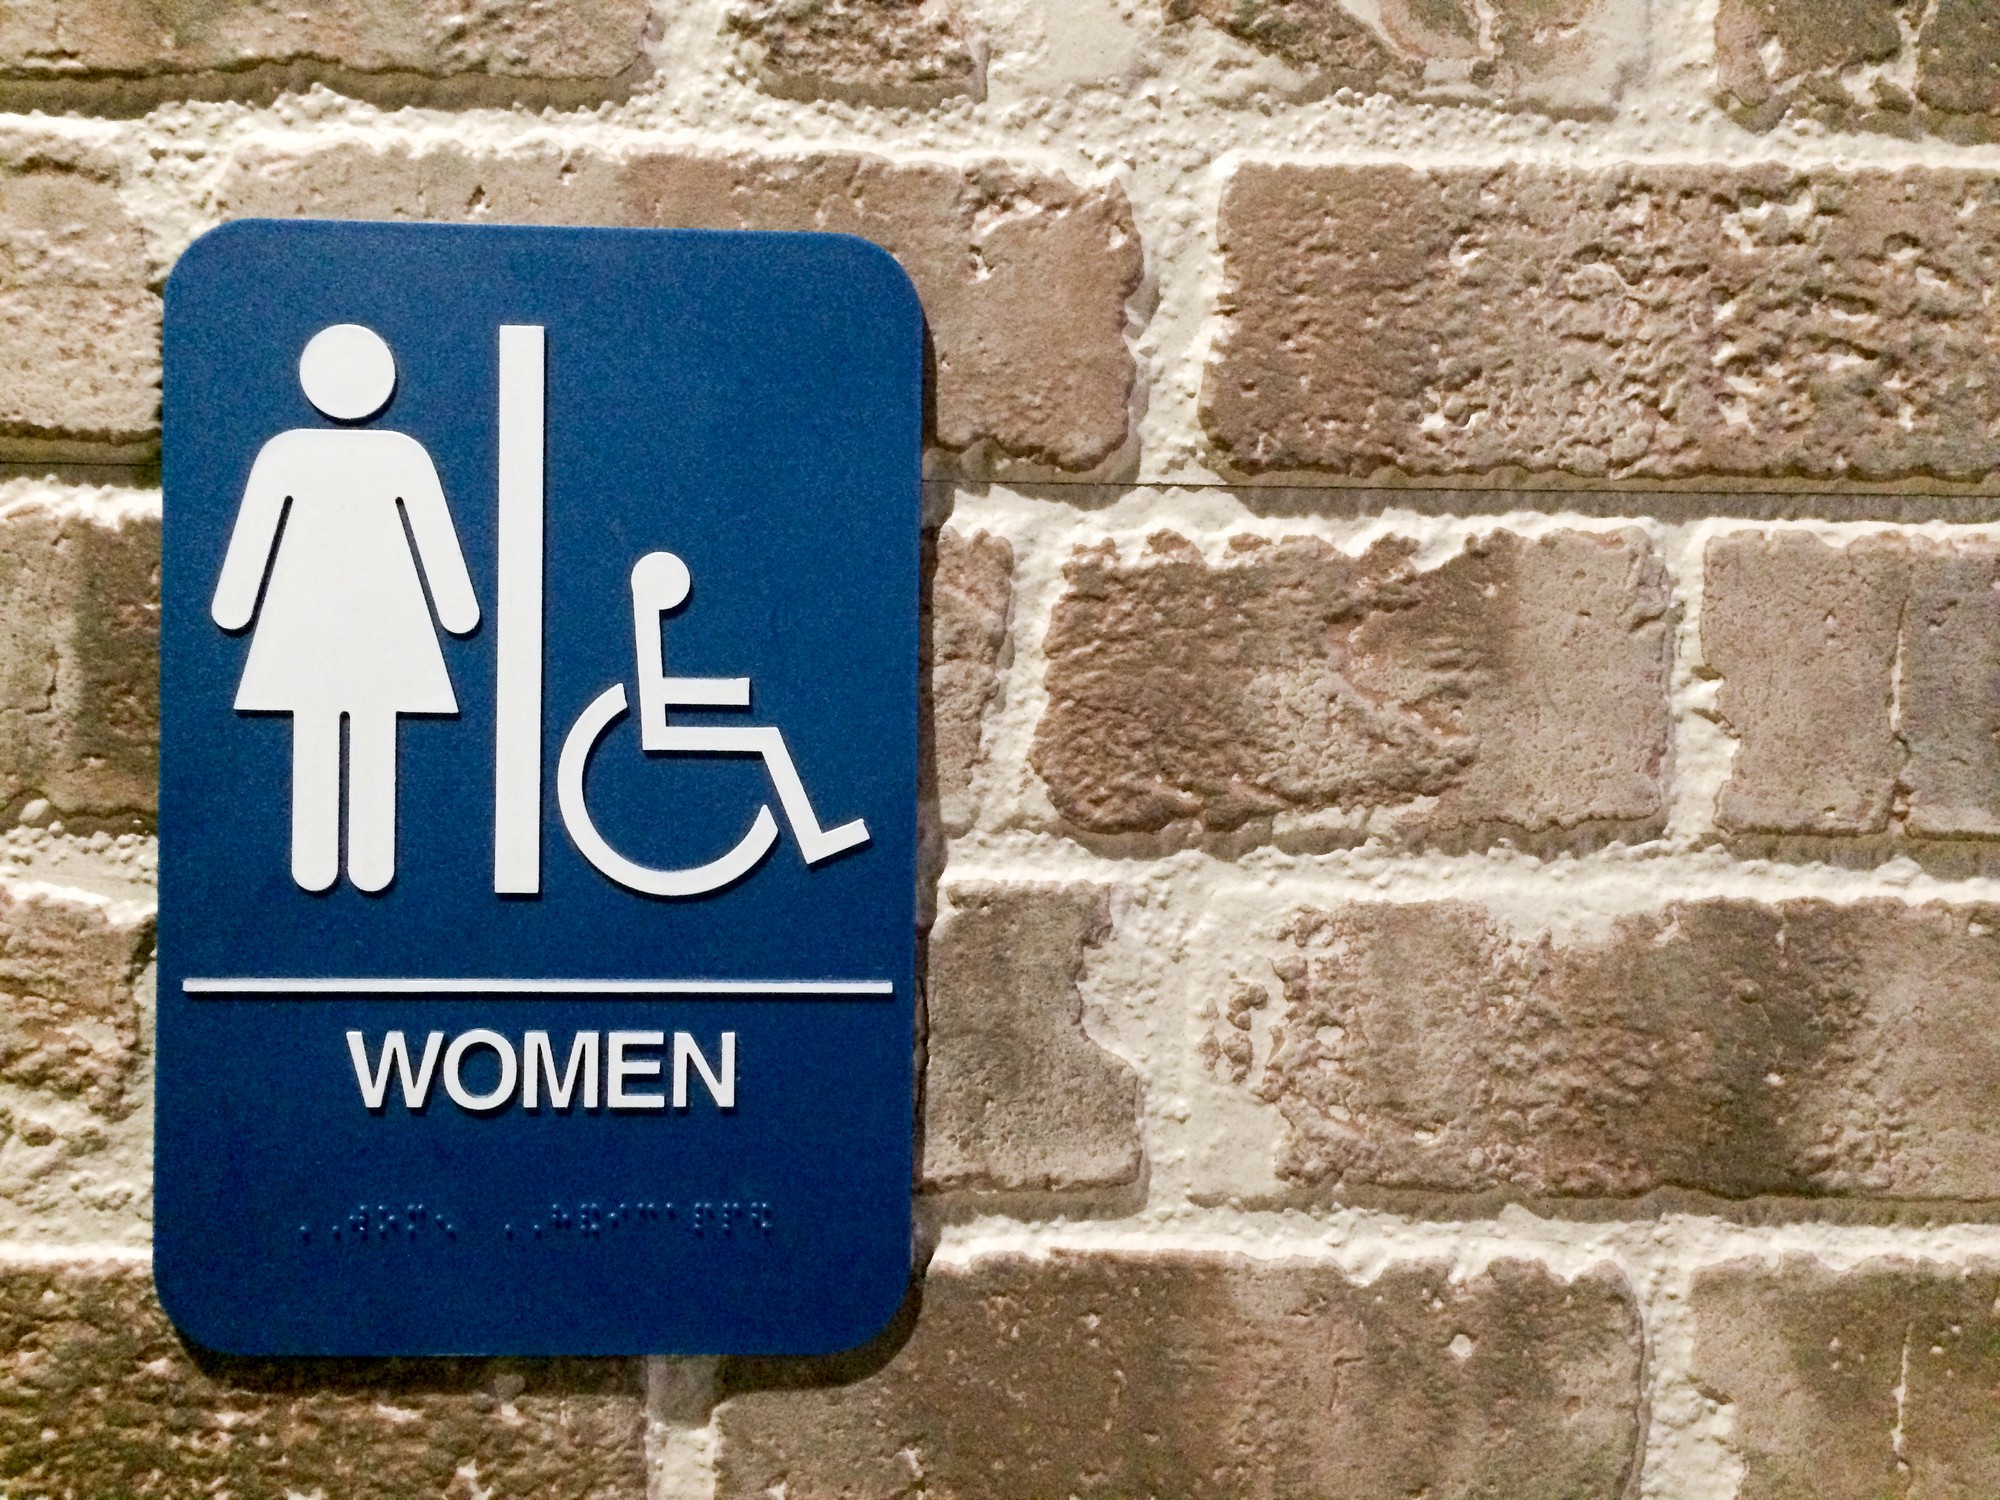 Women restroom WC blue white sign handicap pictogram symbol